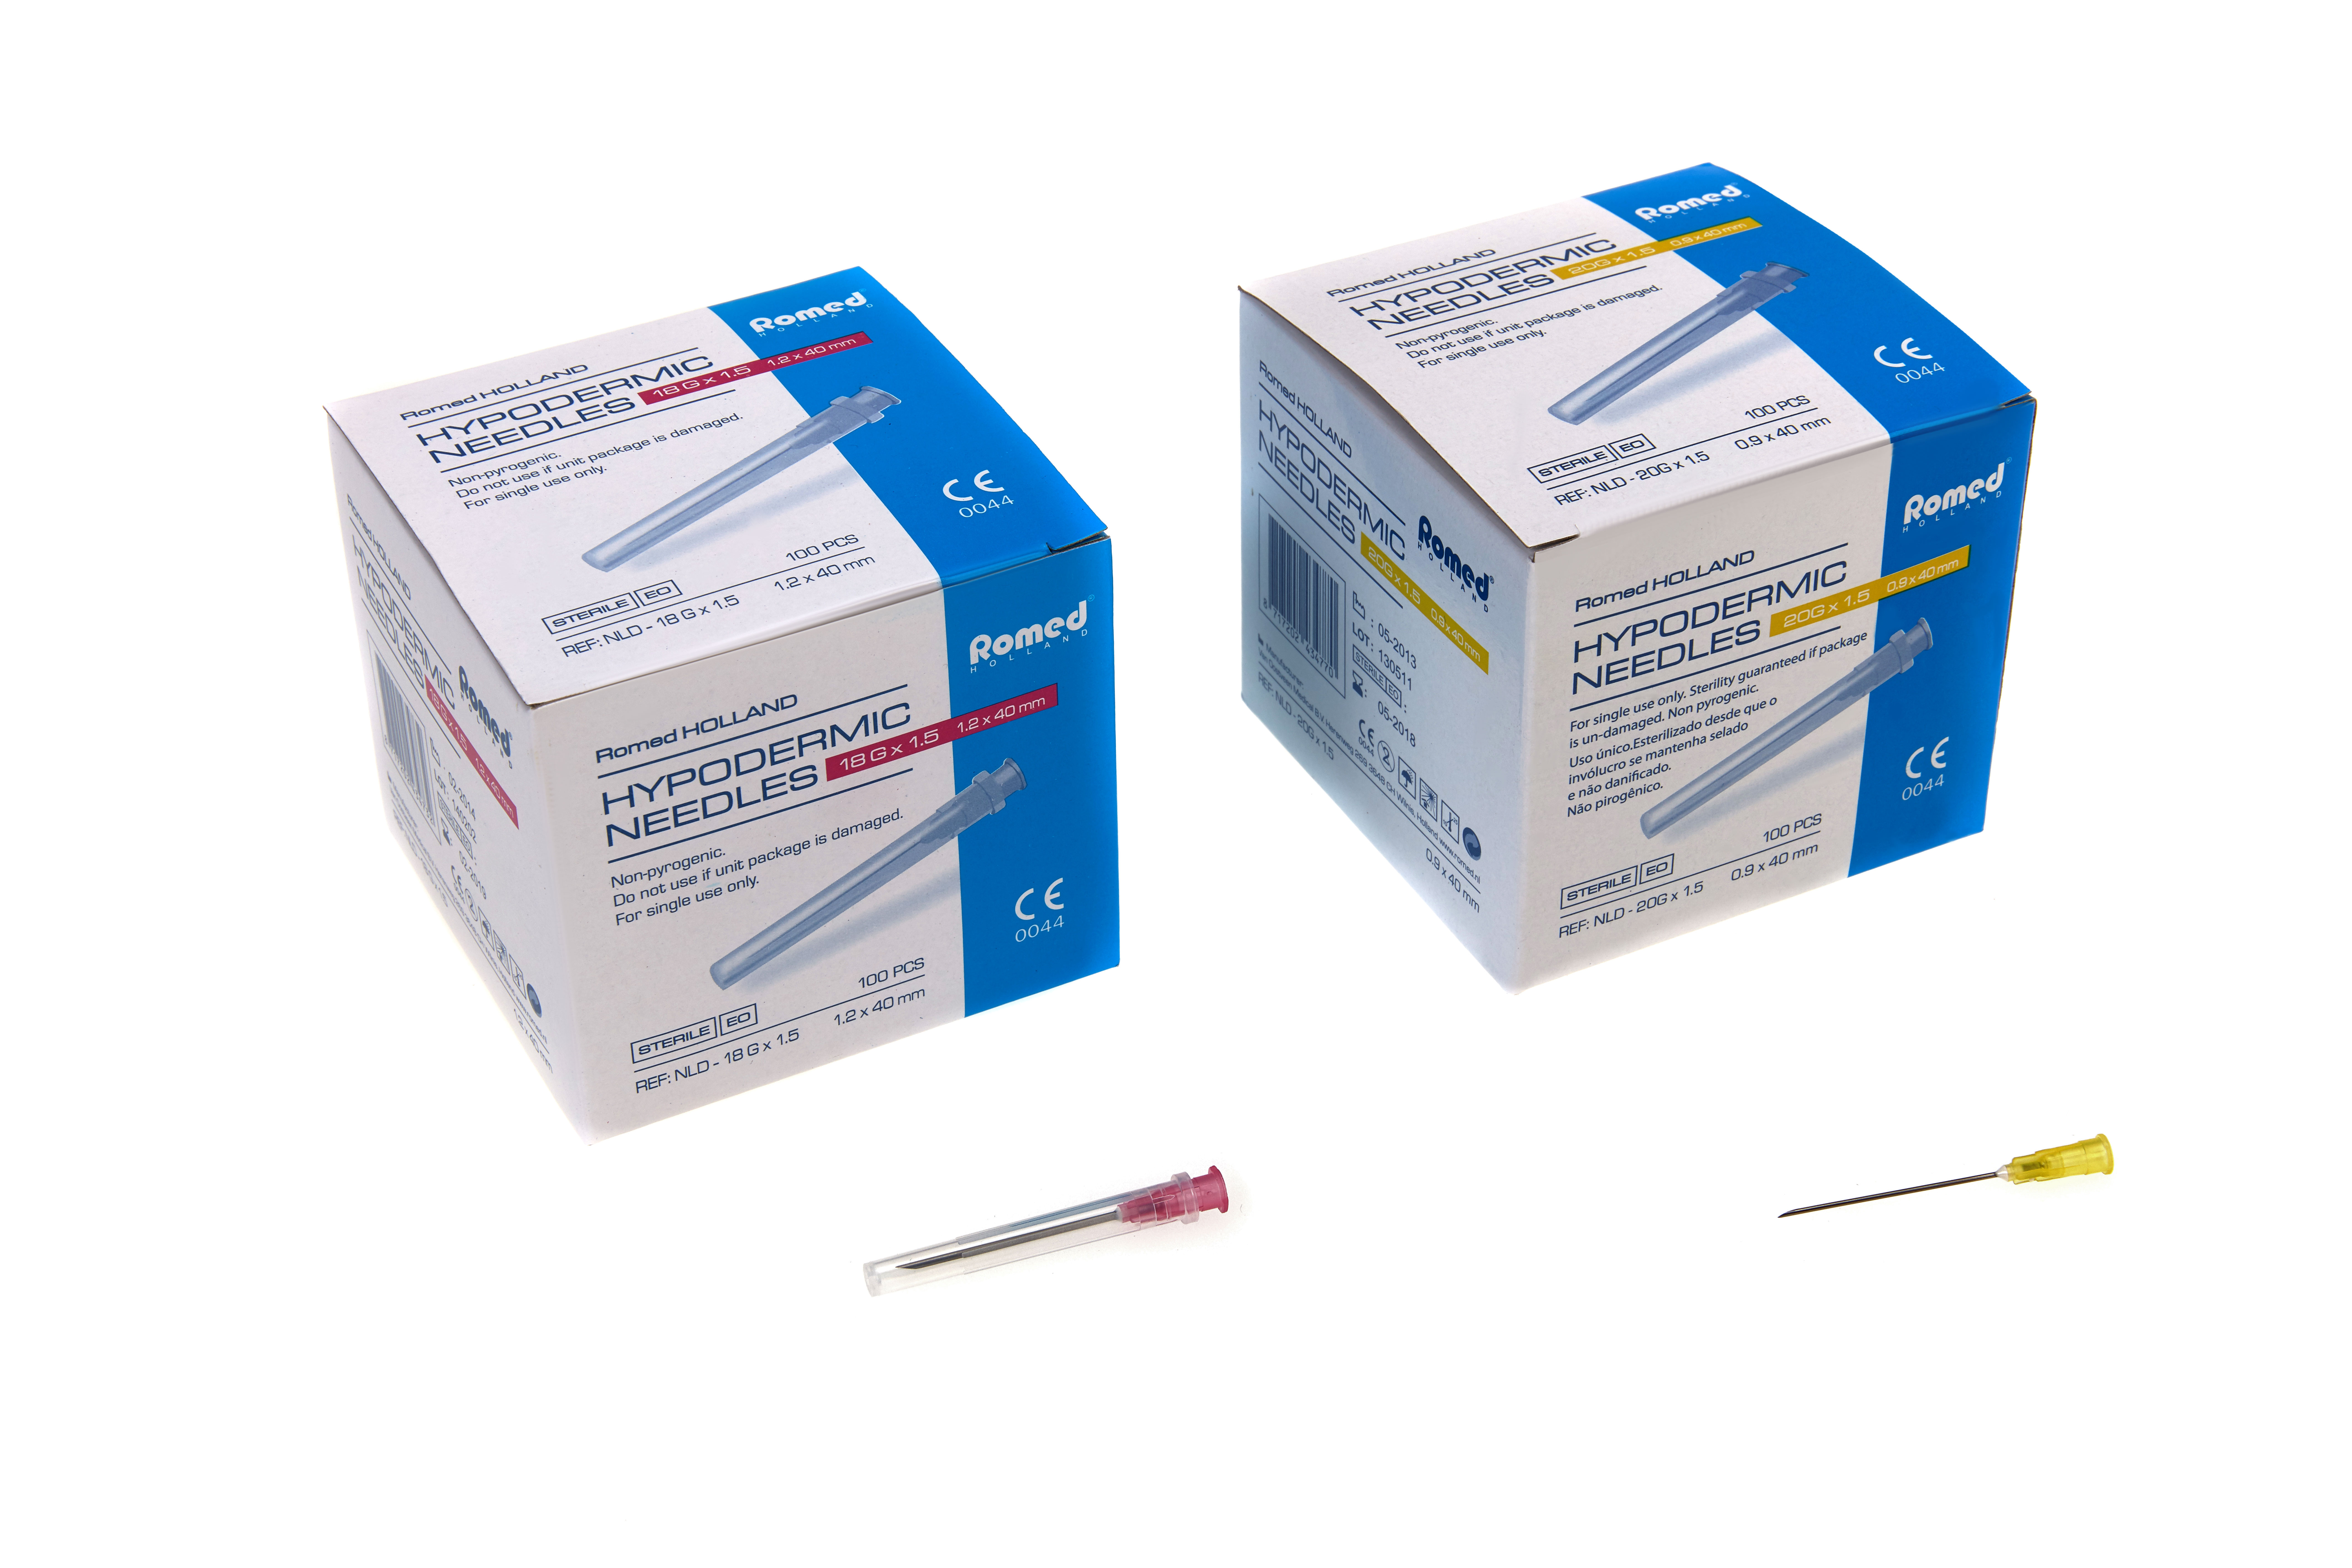 NLD-22GX1.25 Romed hypodermic needles, 22gx1.25", sterile per piece, 100 pcs in an inner box, 50 x 100 pcs = 5.000 pcs in a carton.